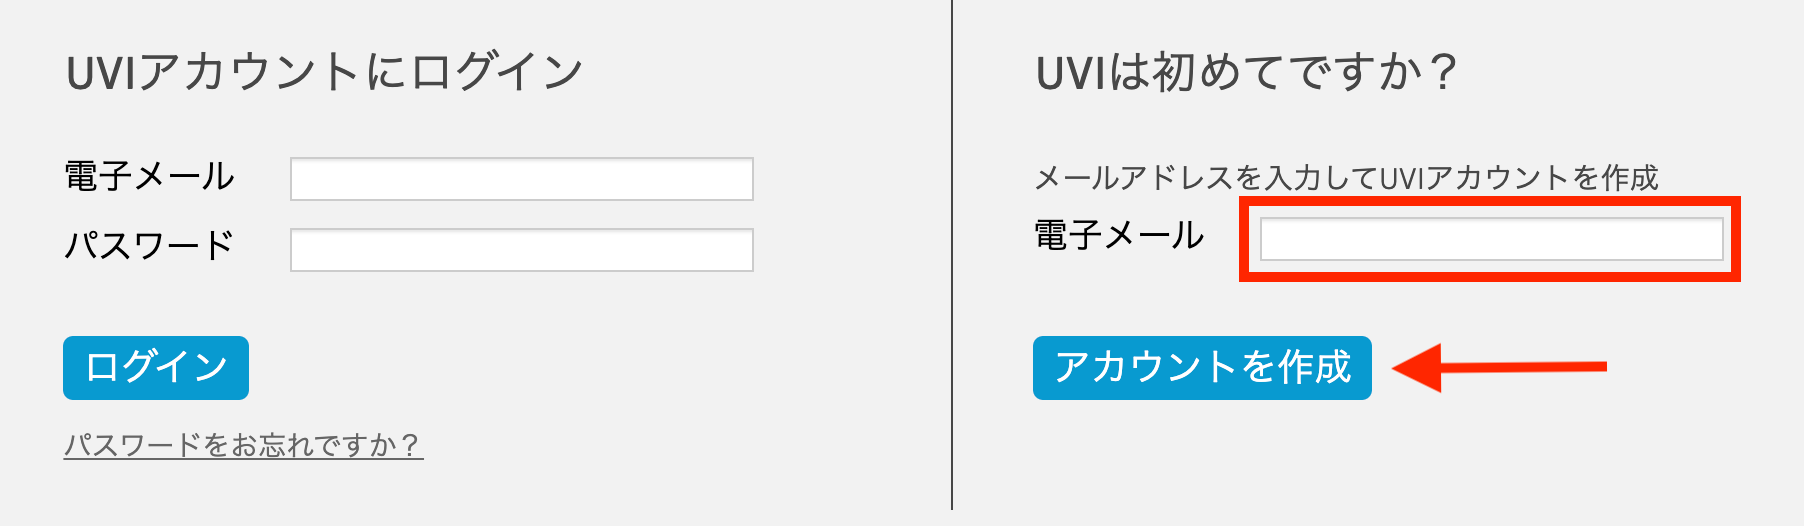 create_uvi_account.png